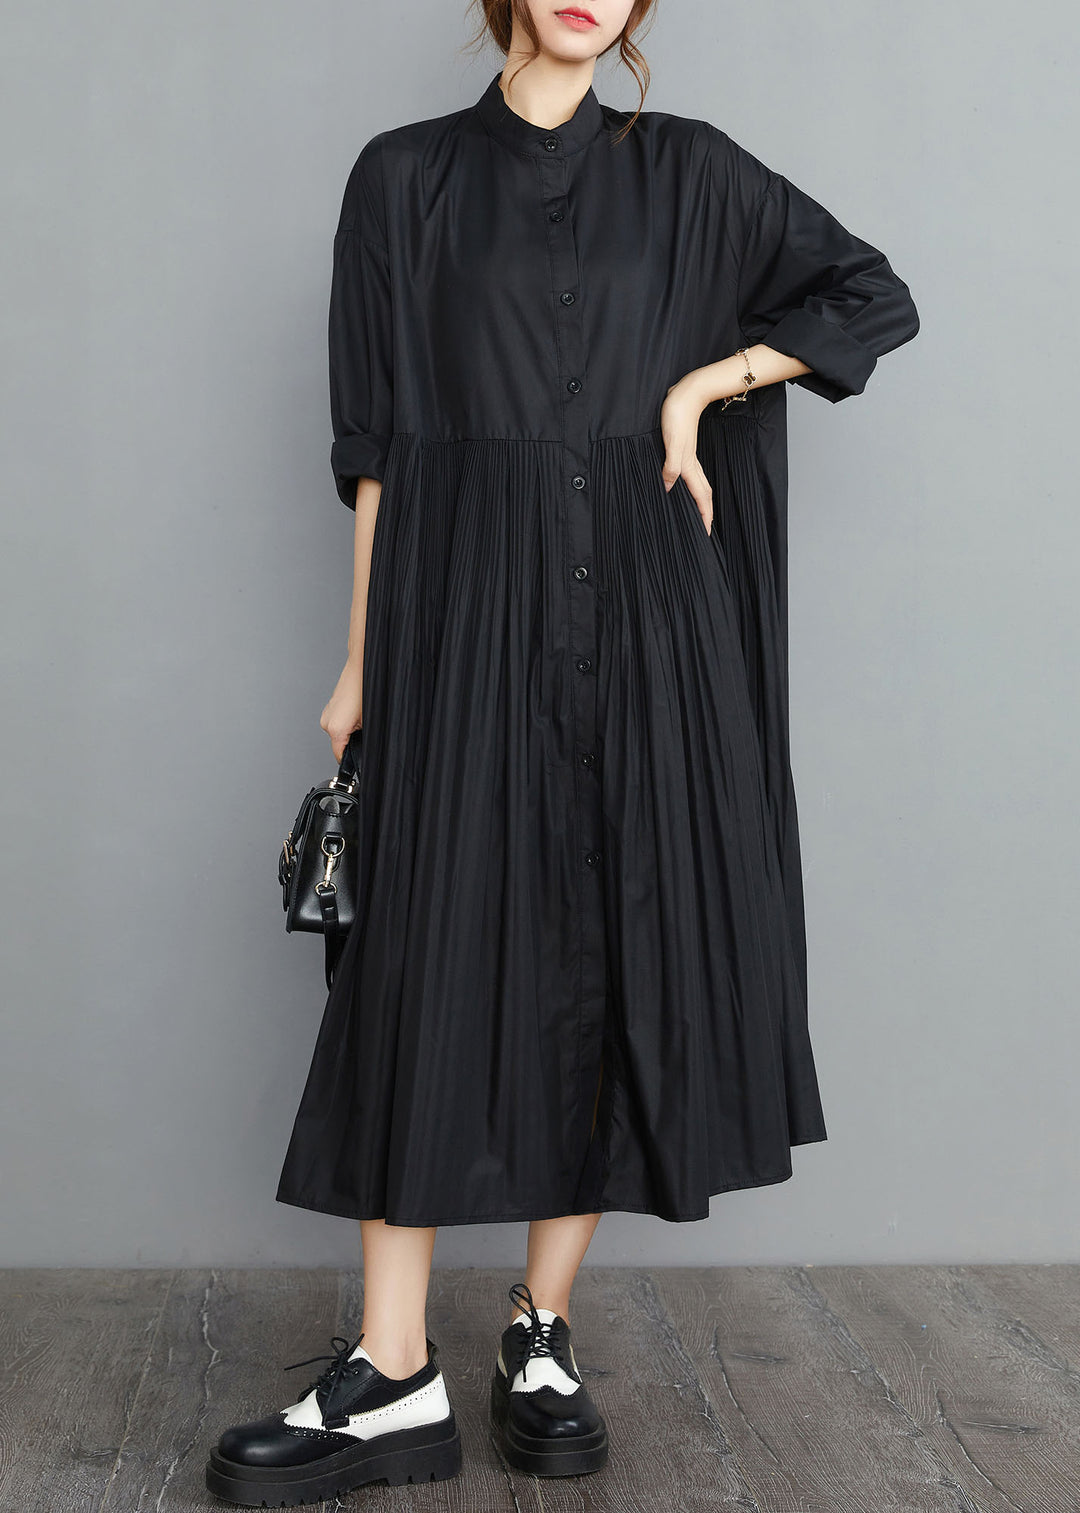 Simple Black wrinkled Cotton Robe Dresses Spring